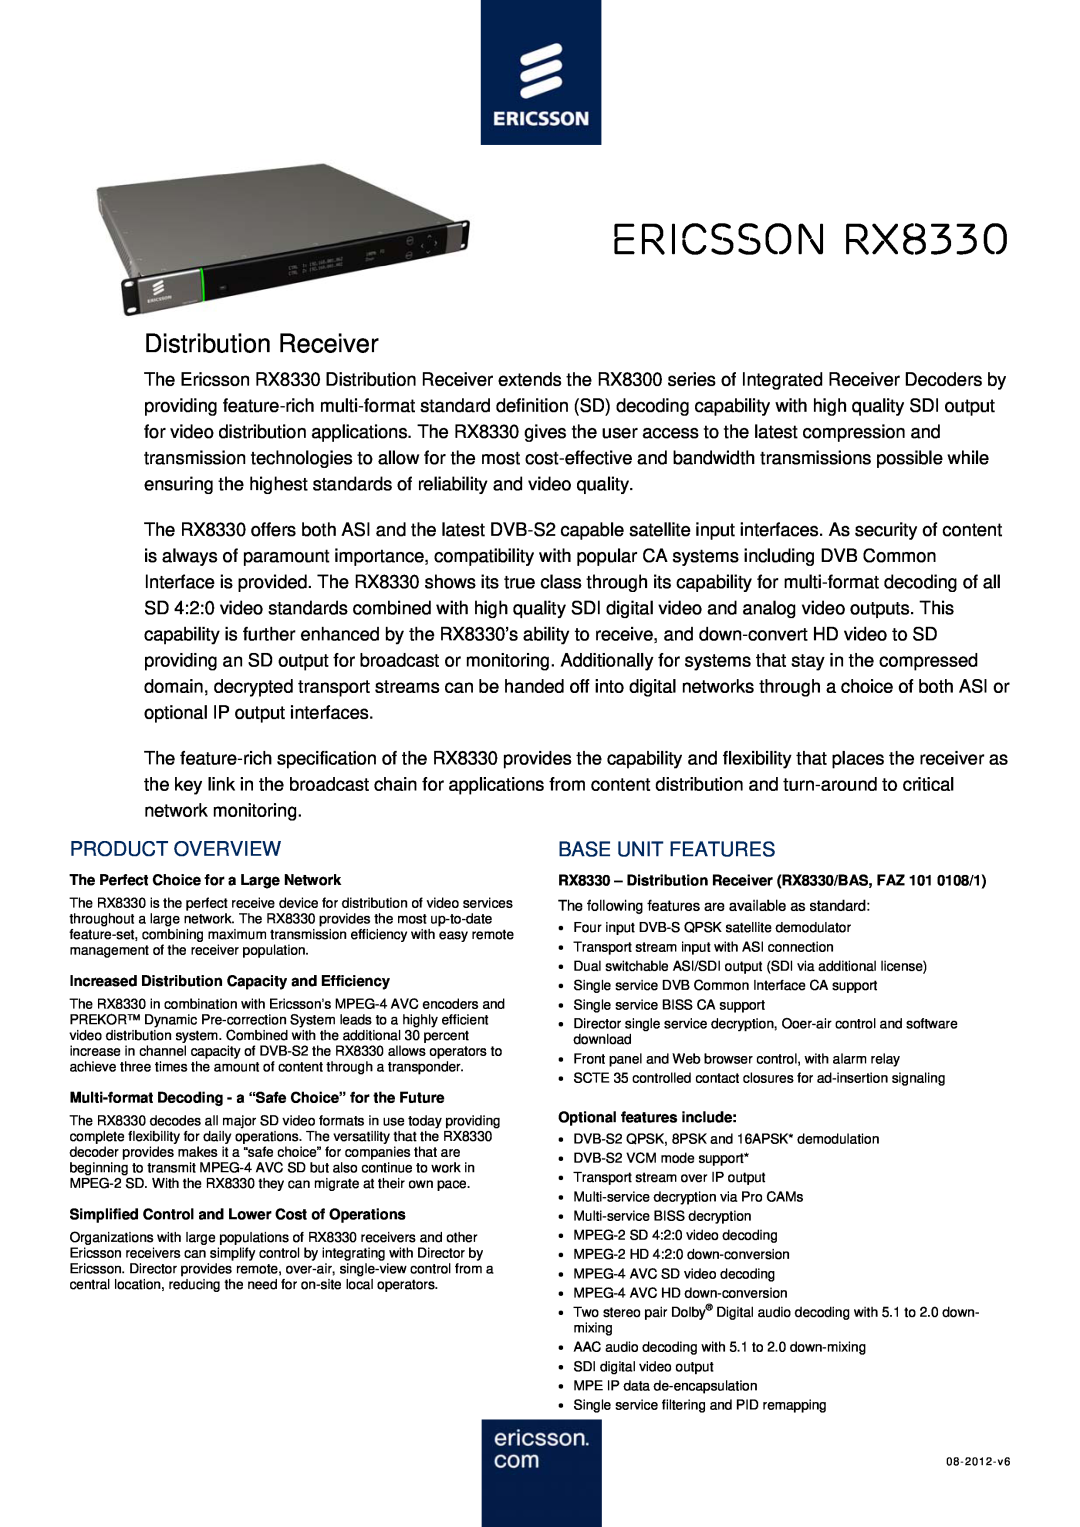 Ericsson manual Product Overview, Base Unit Features, Ericsson RX8330, Distribution Receiver 